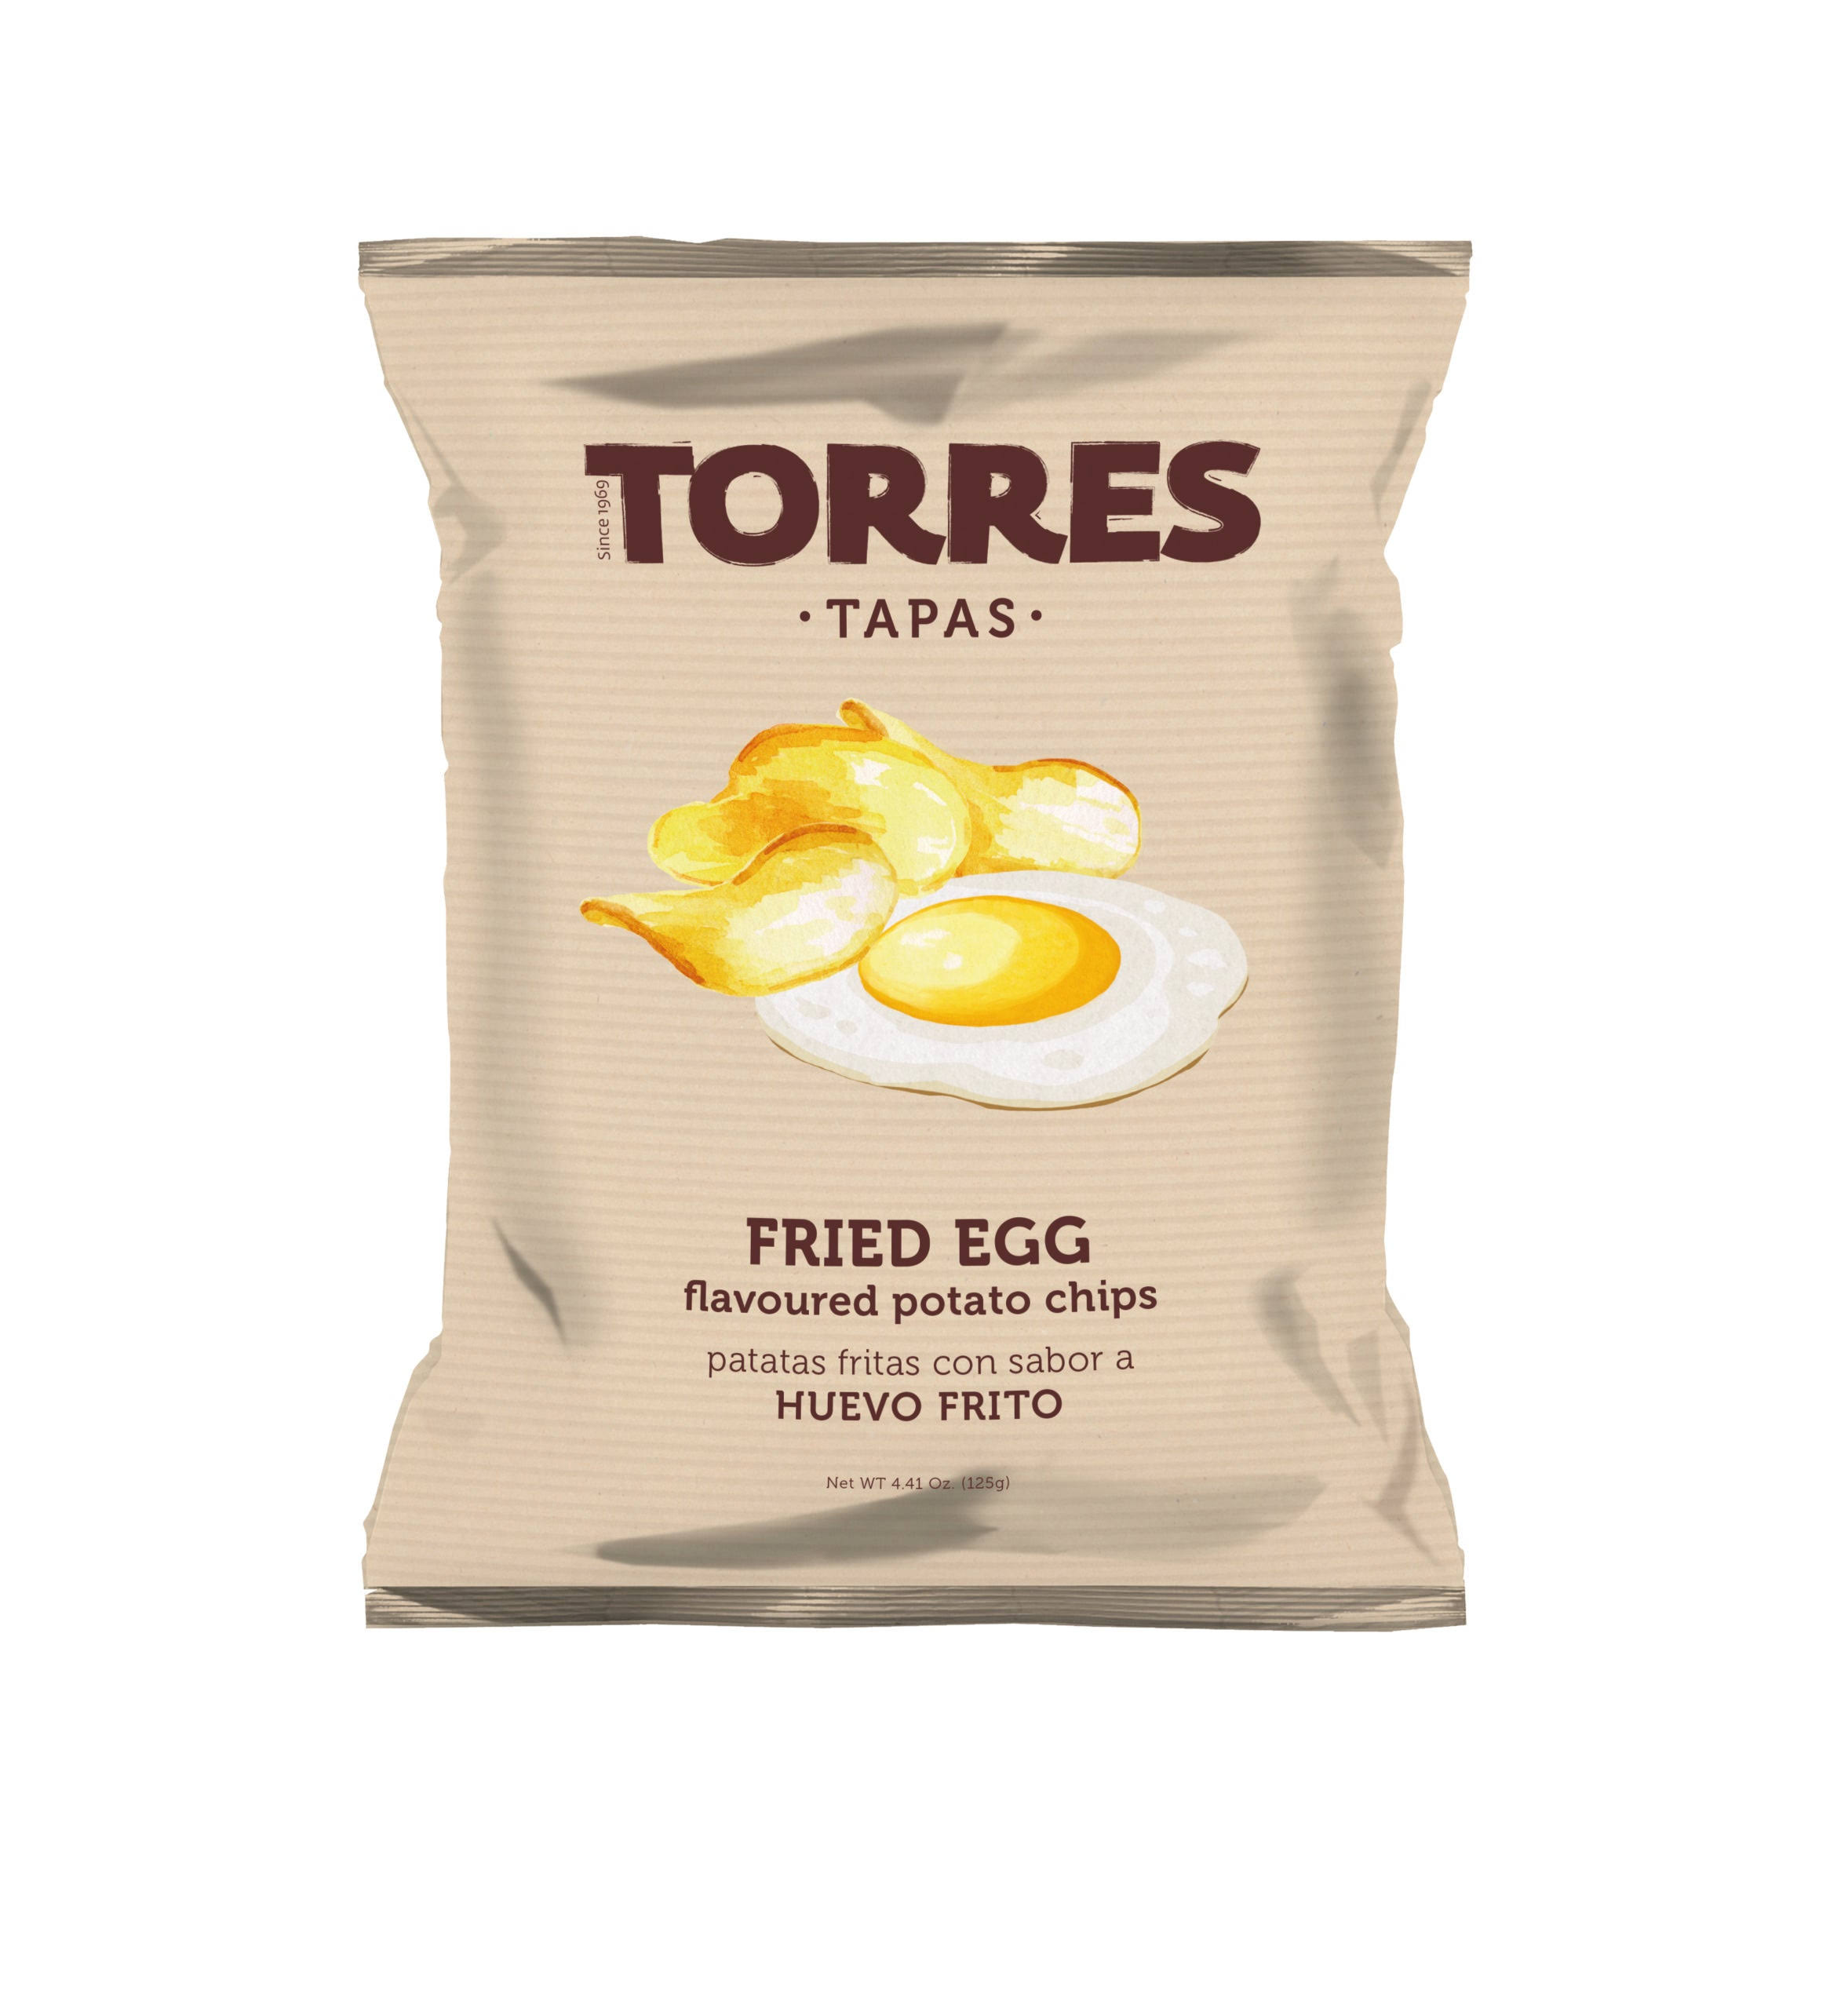 Torres Tapas Fried Egg Potato Chips 125g (4.41 Oz)